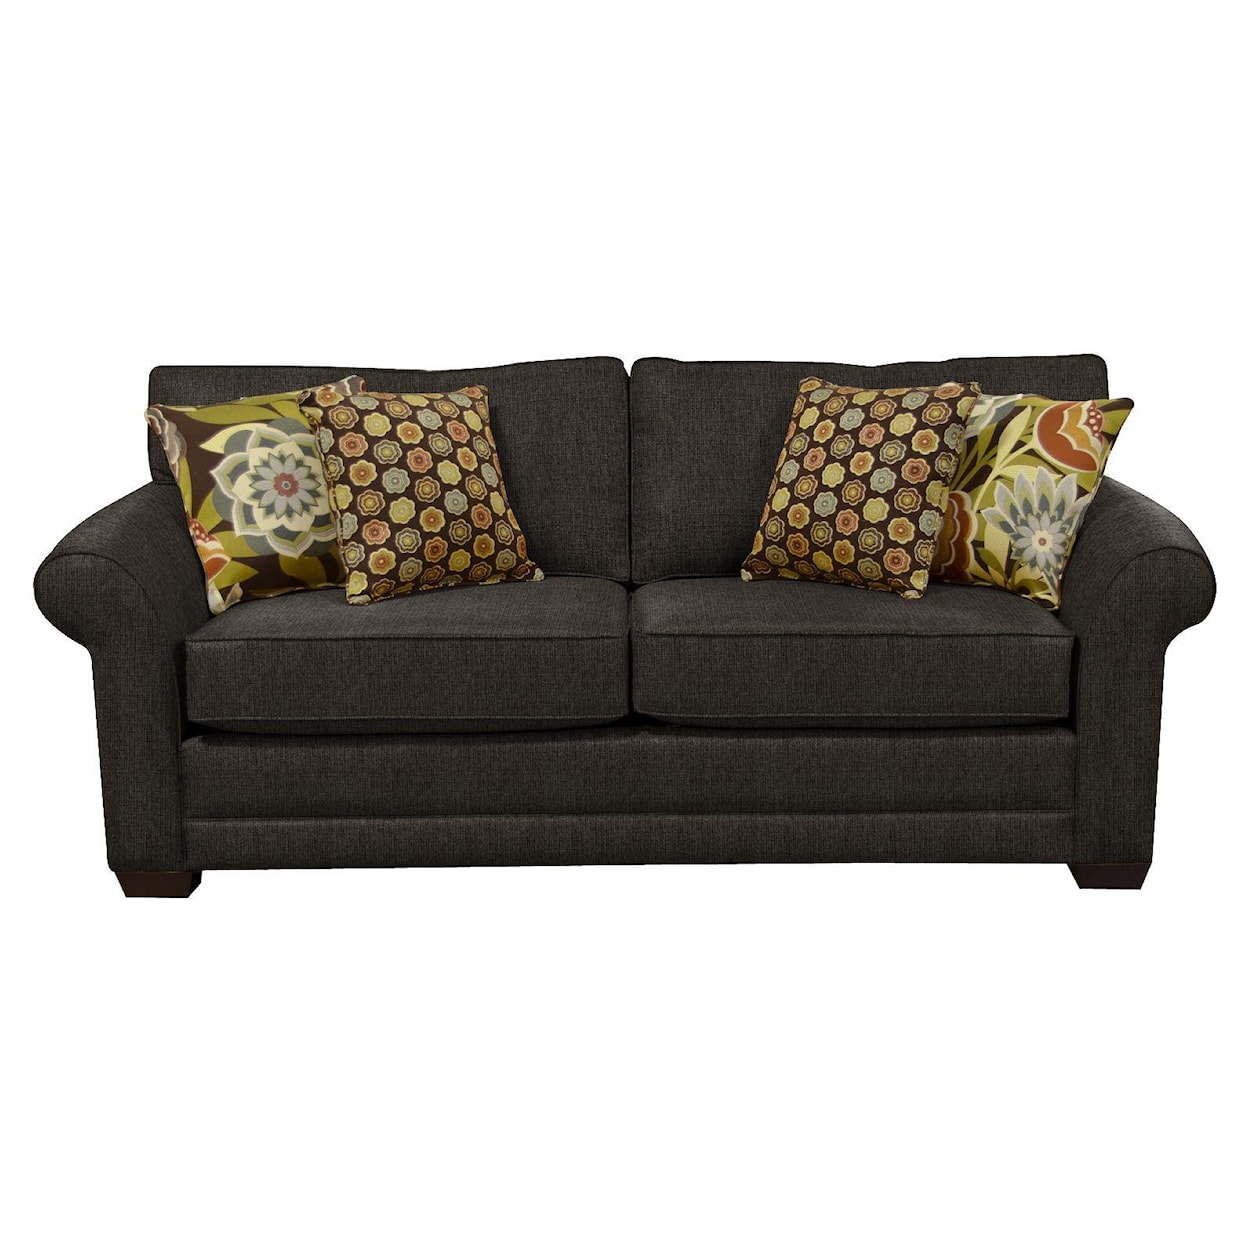 England 5630 Series Upholstered Stationary Sofa